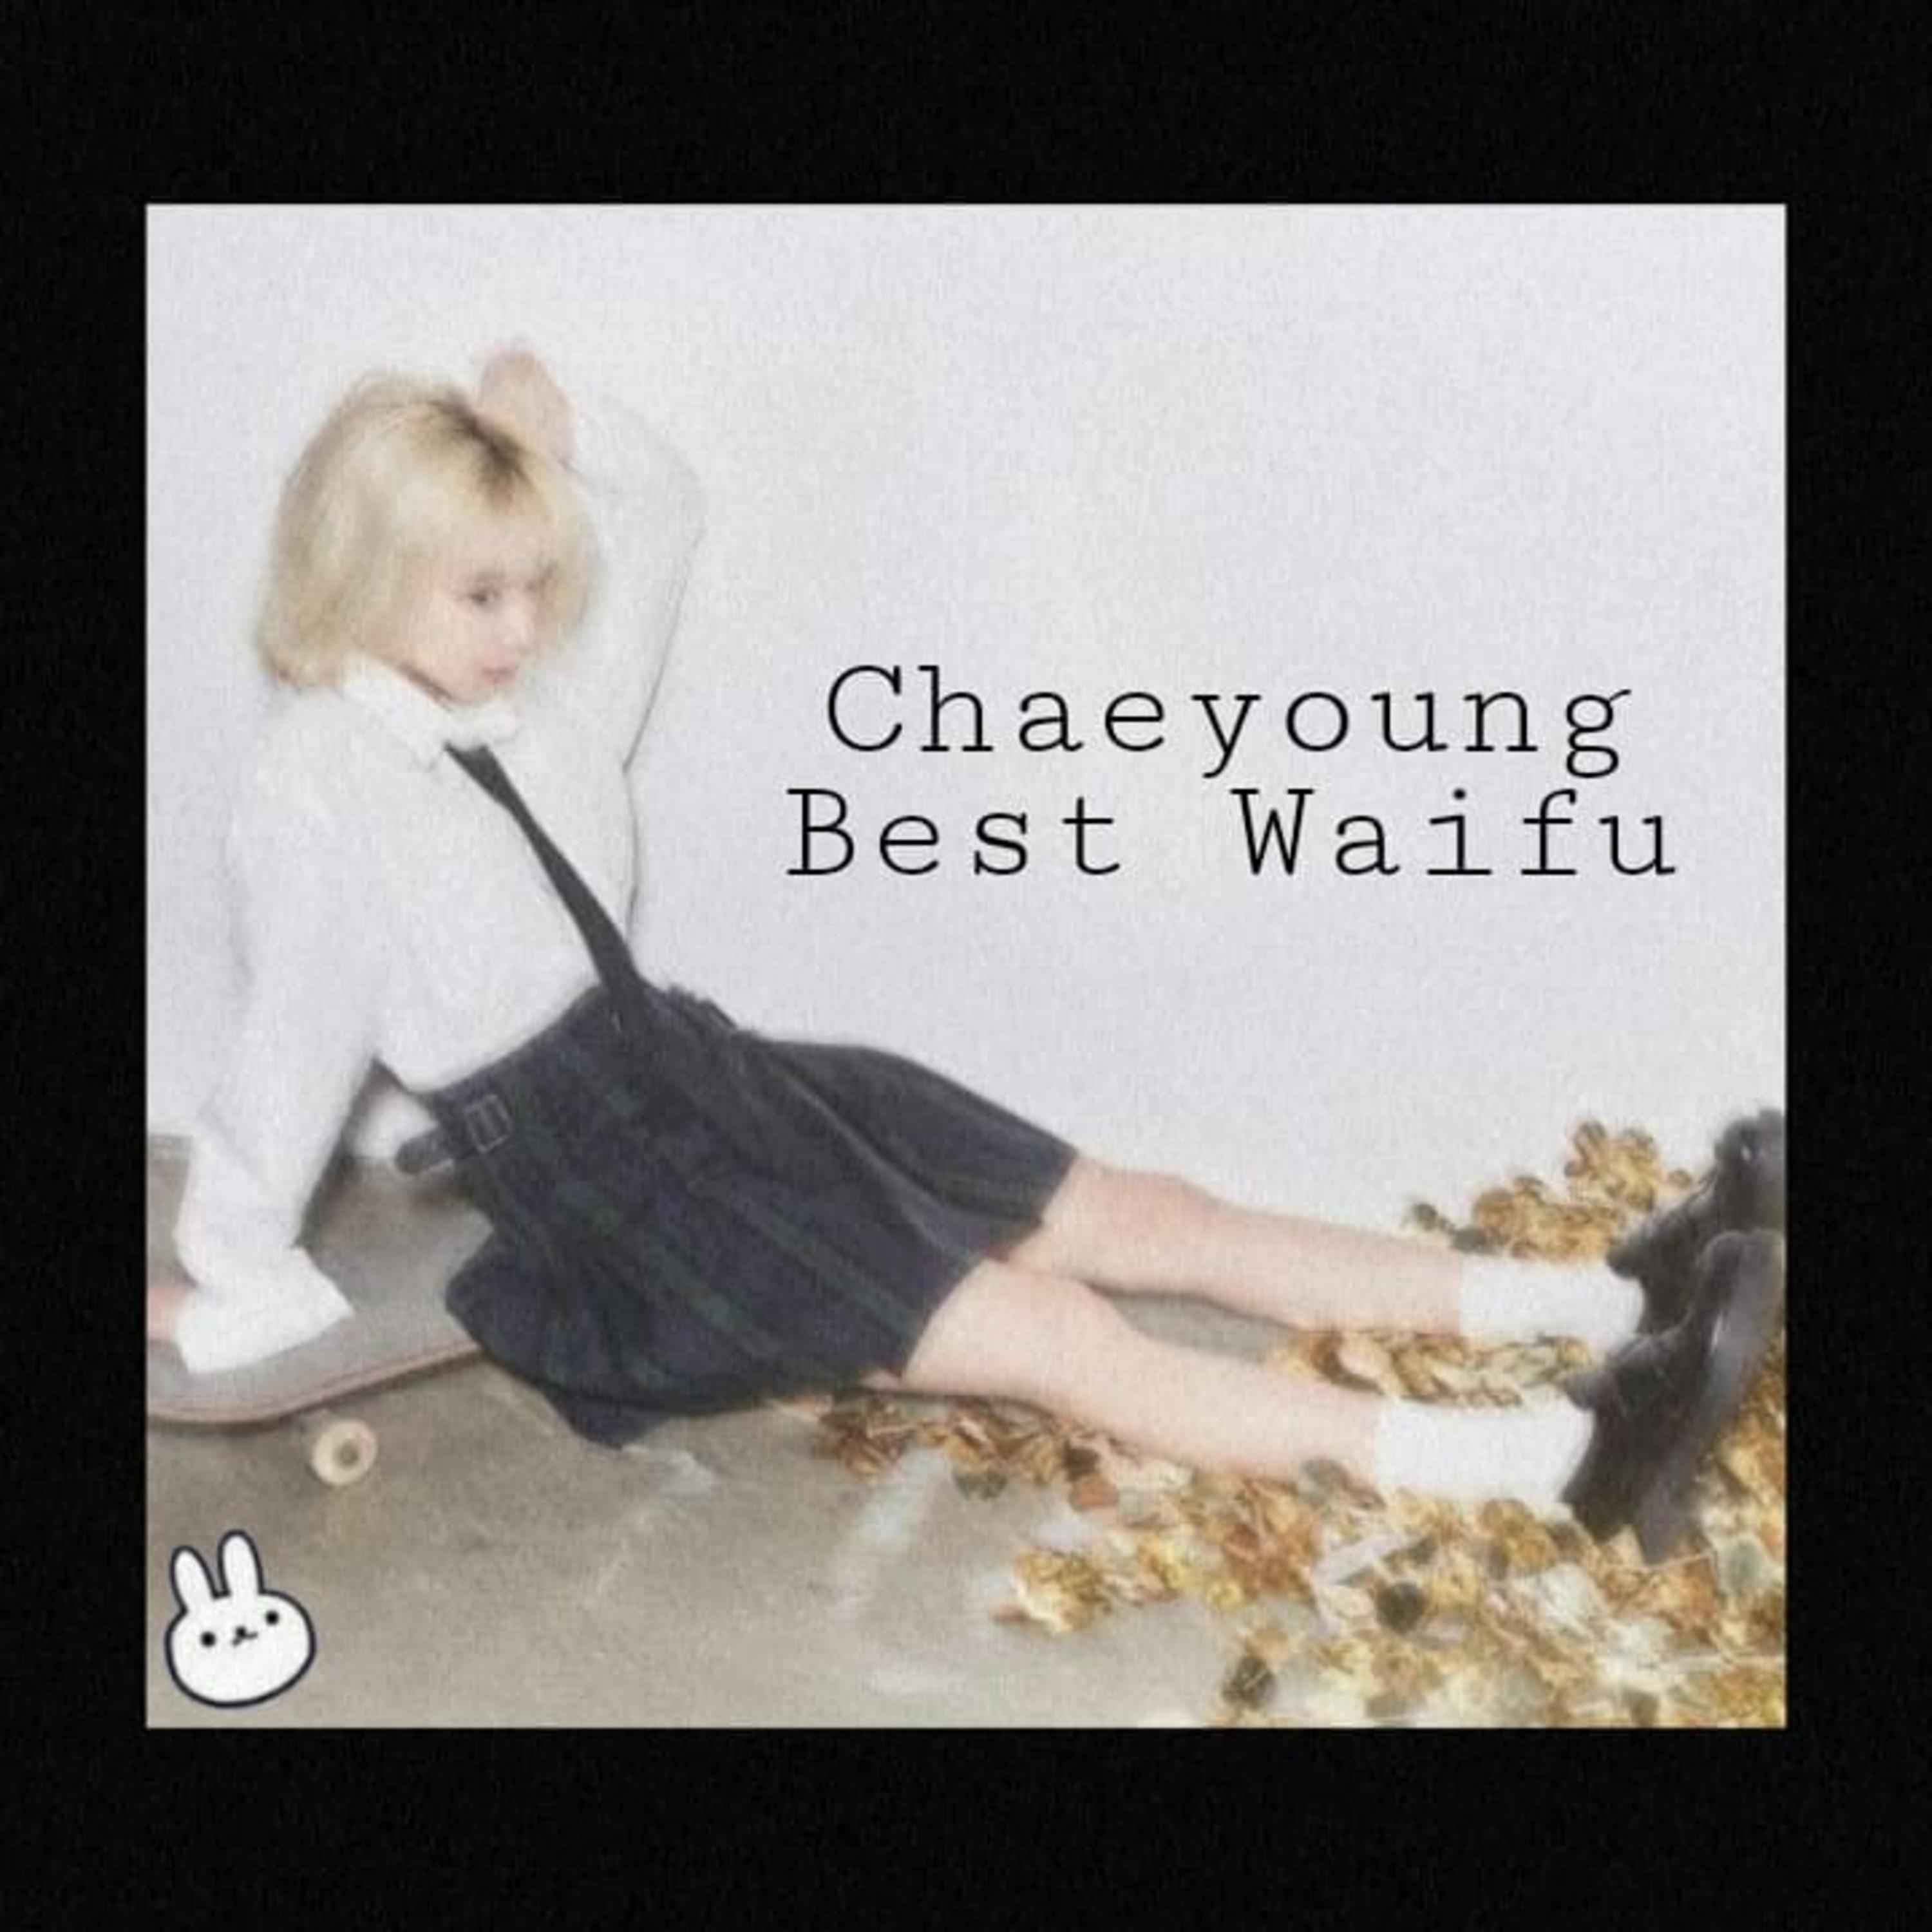 Young Angel Toxic - Chaeyoung Best Waifu